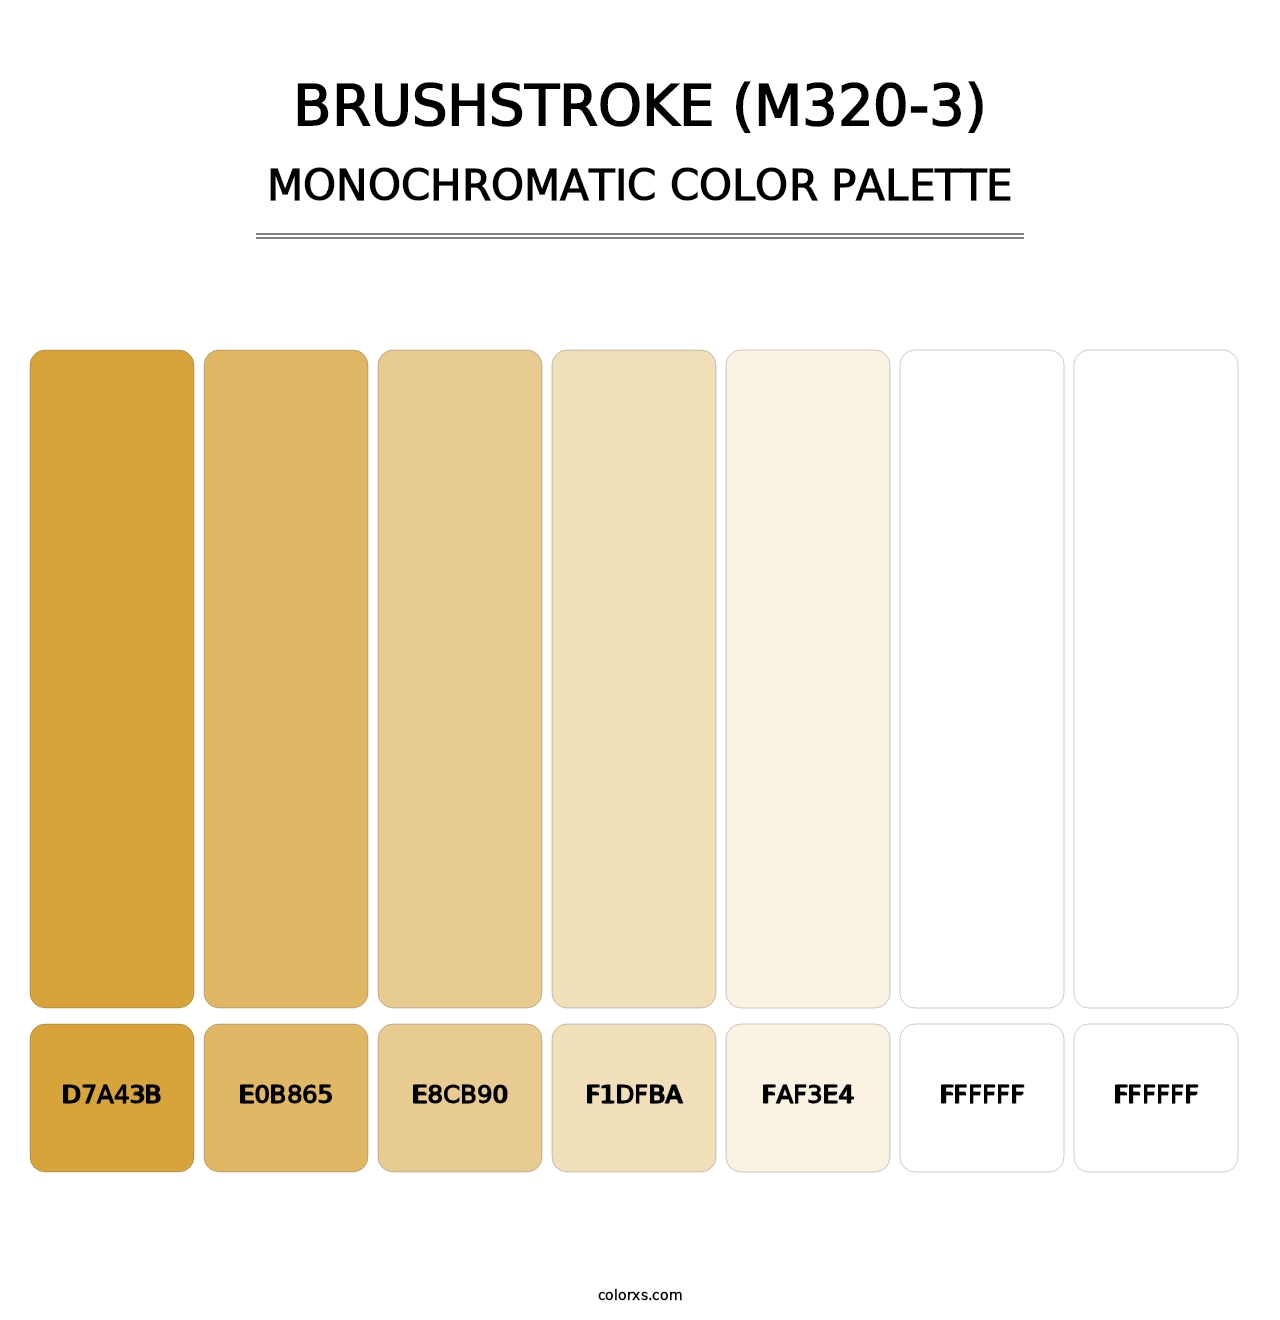 Brushstroke (M320-3) - Monochromatic Color Palette